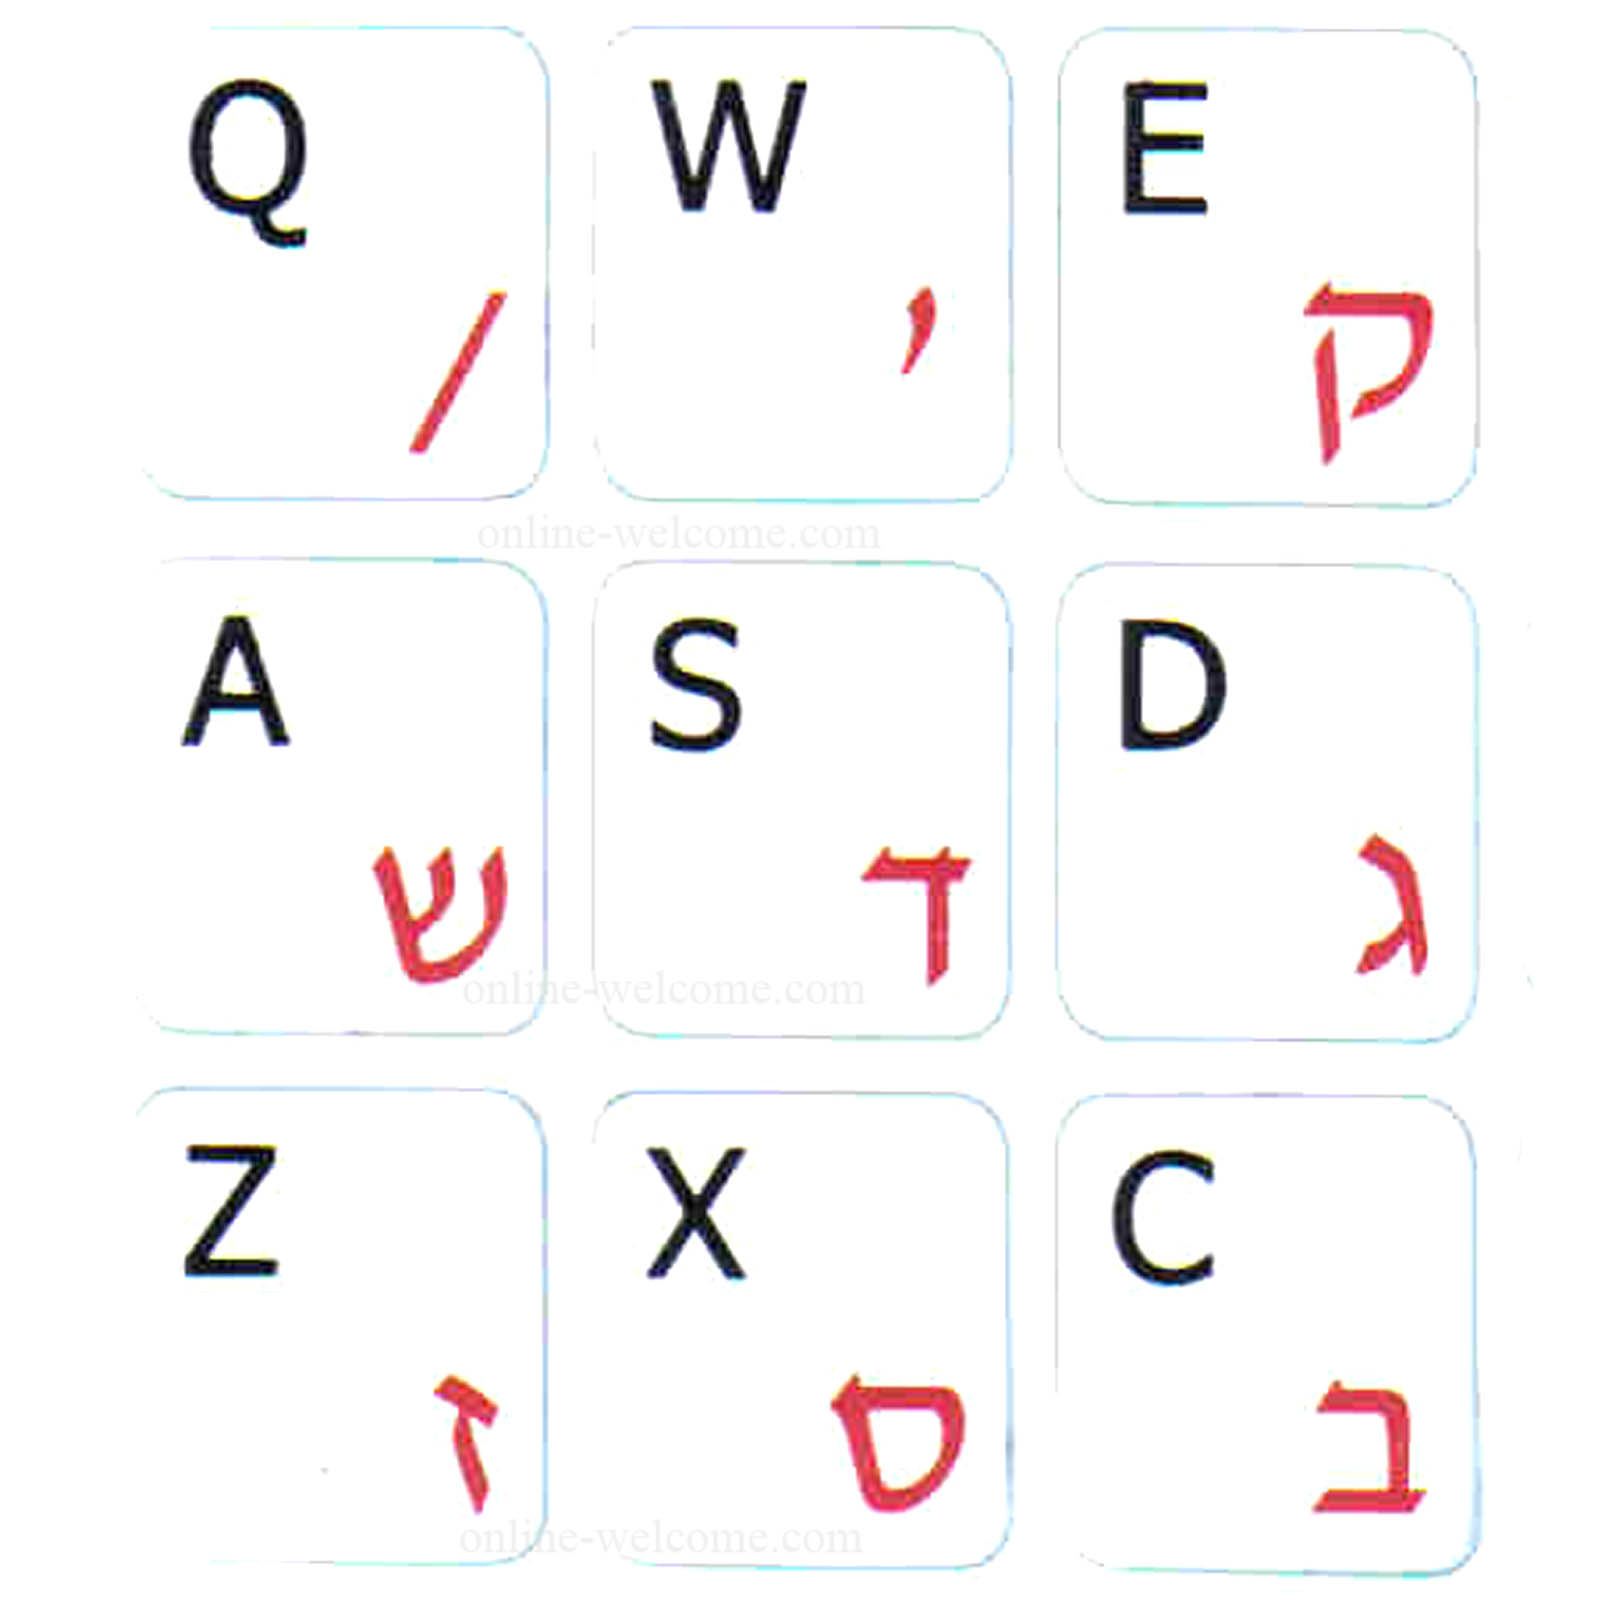 Hebrew-English keyboard key white non transparent